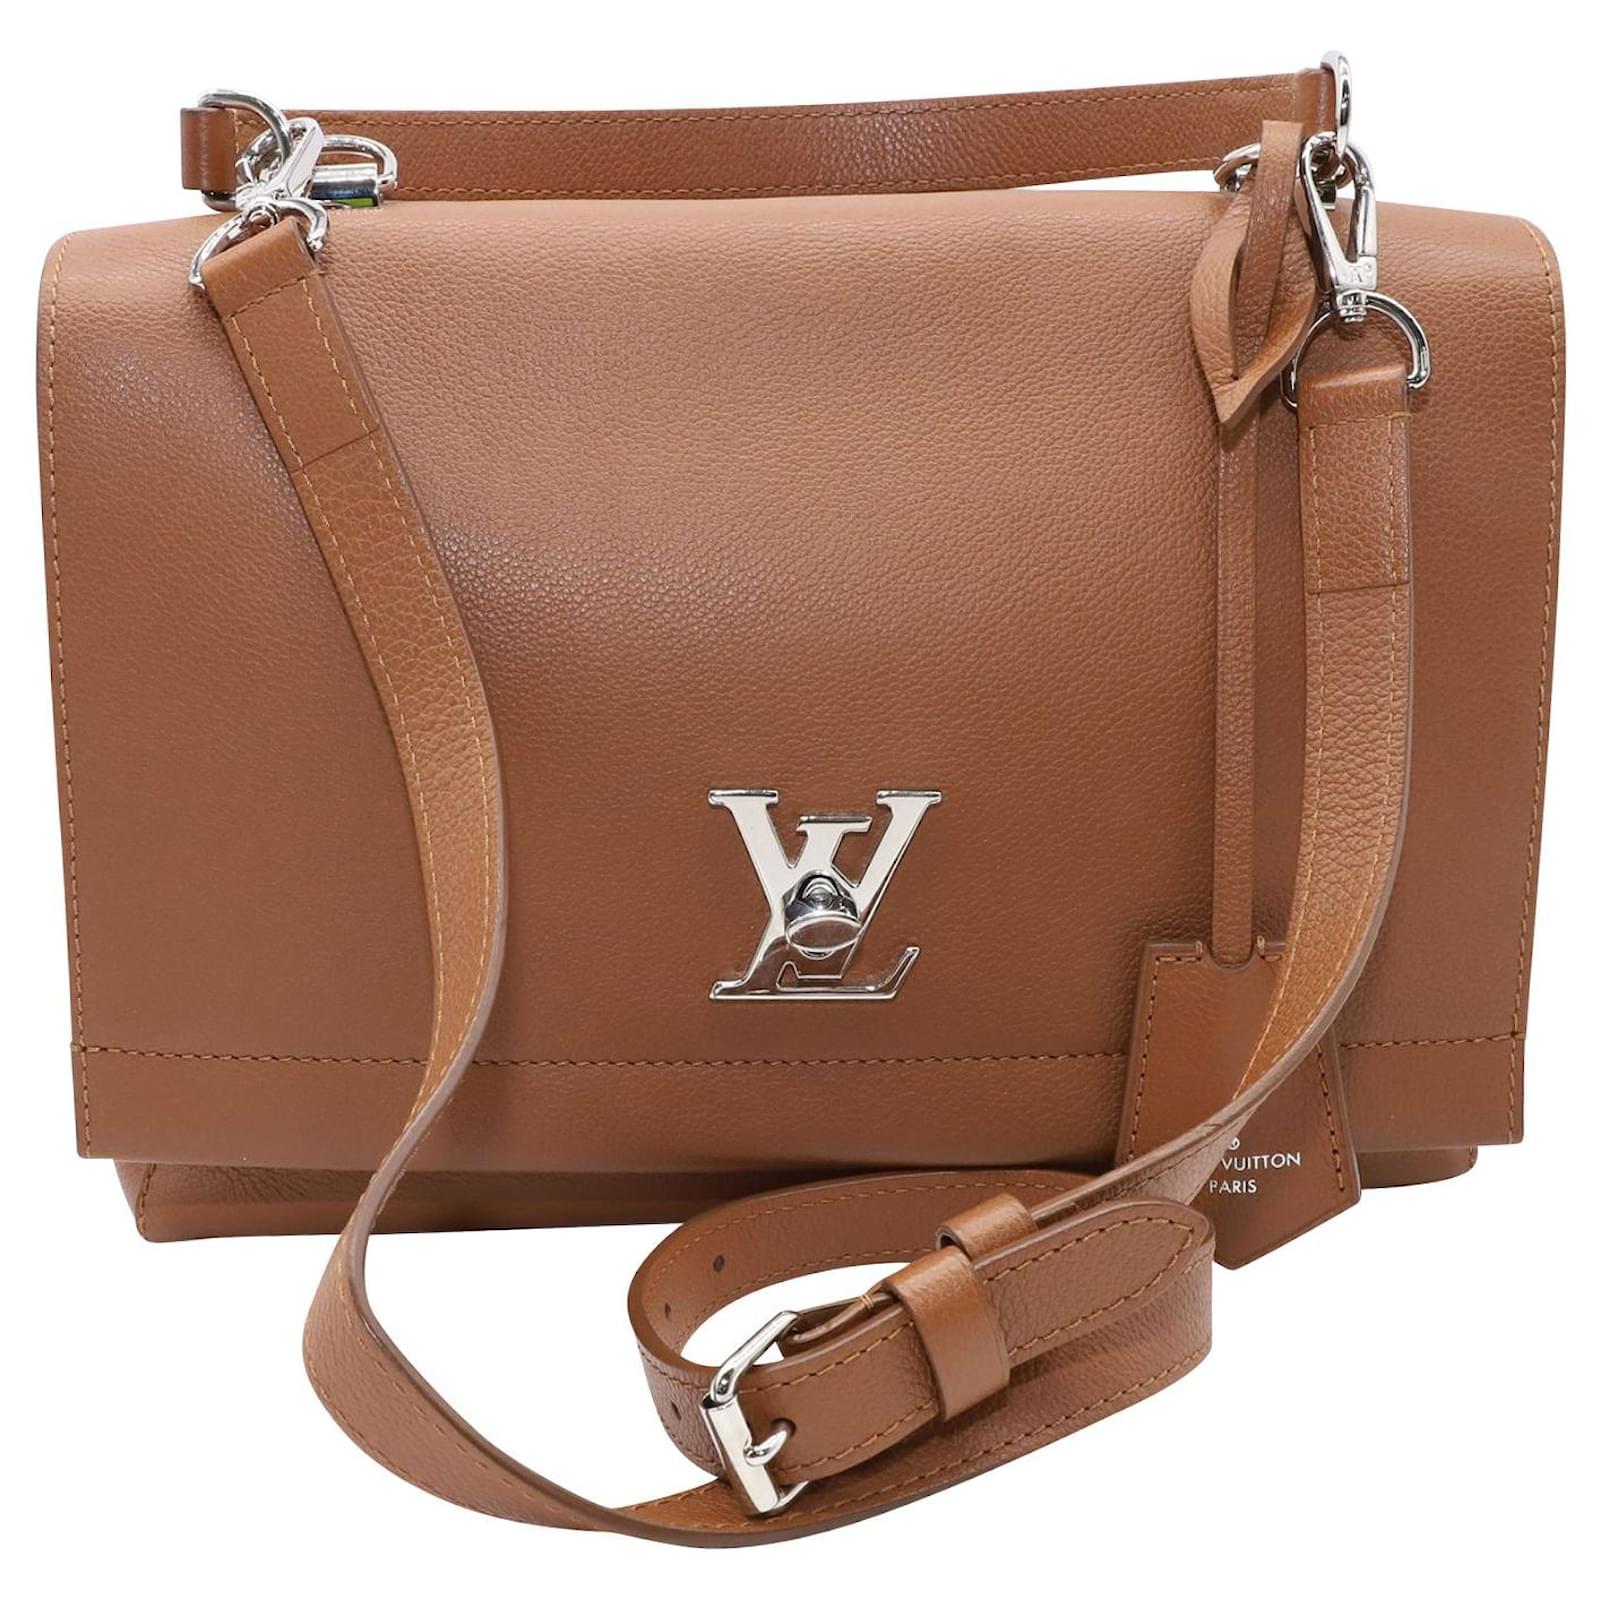 lockme leather handbags